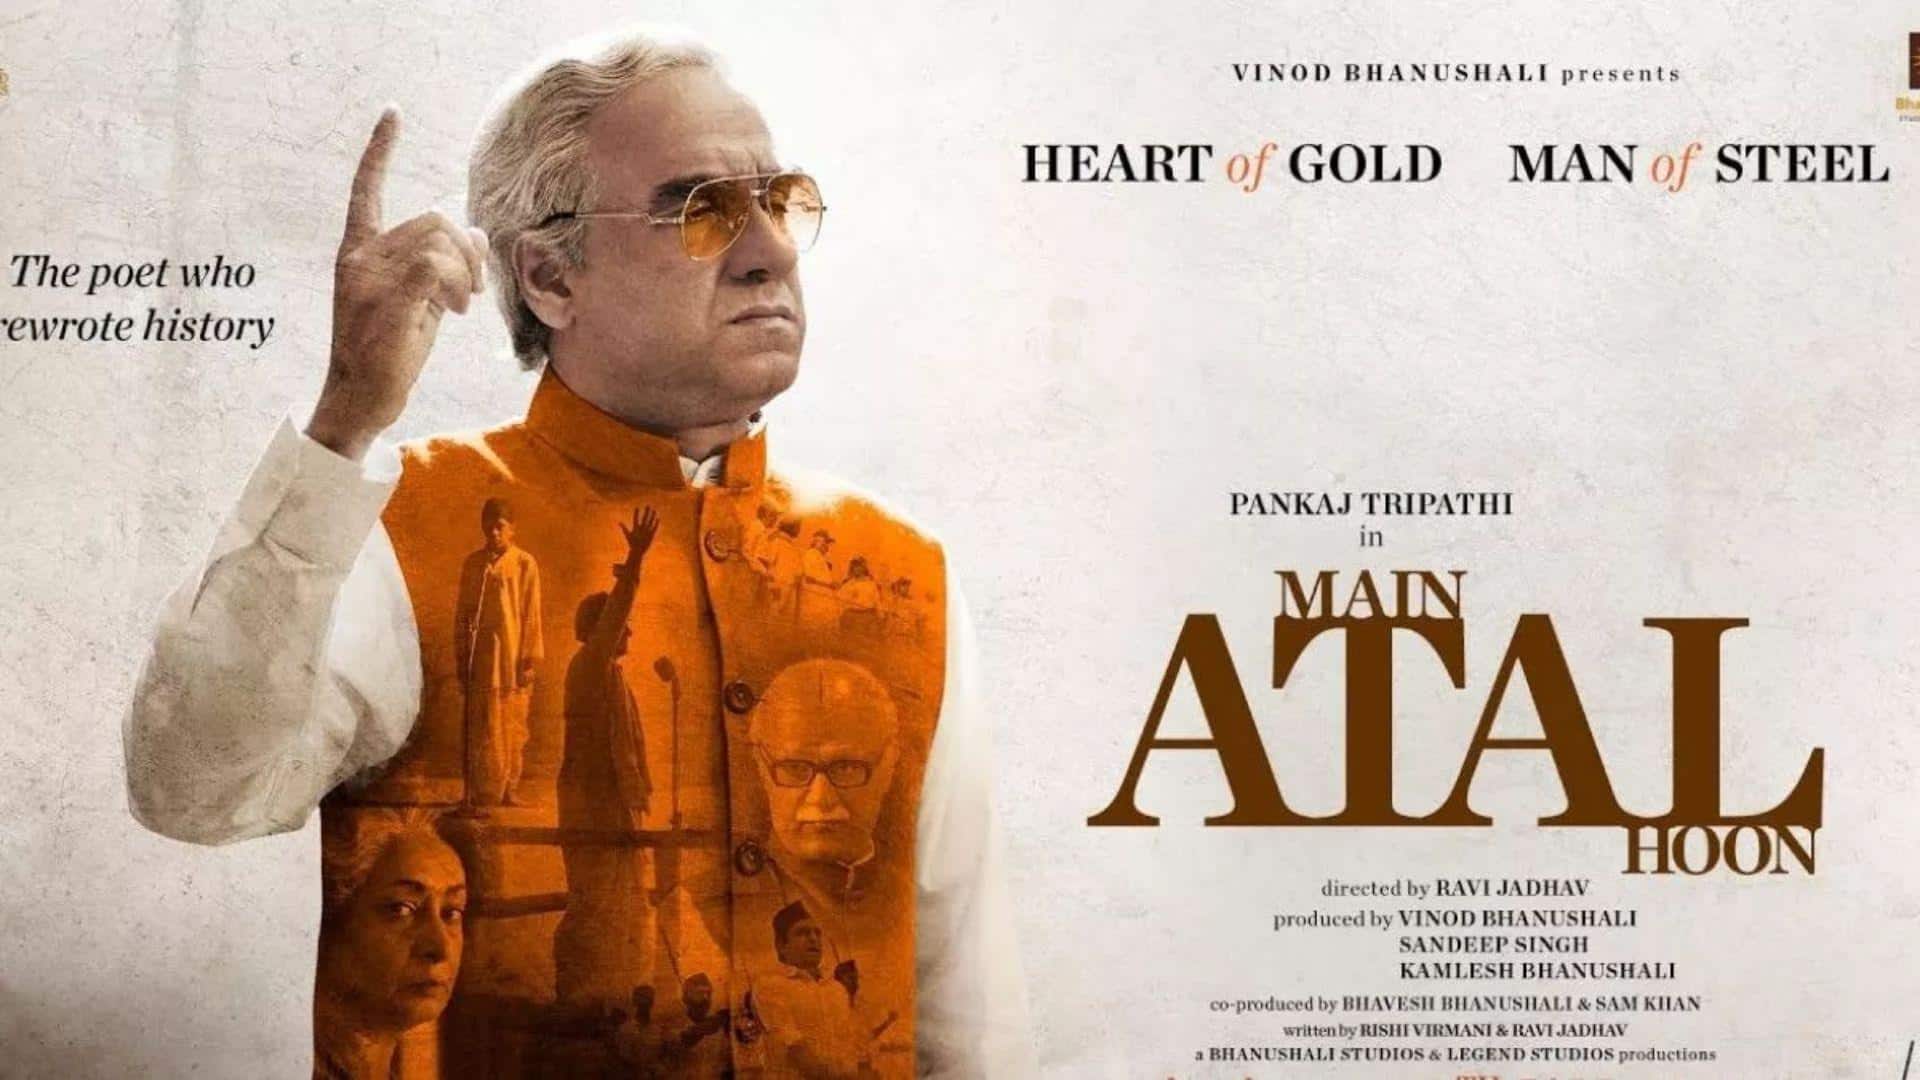 'Main Atal Hoon' OTT release: When, where to watch